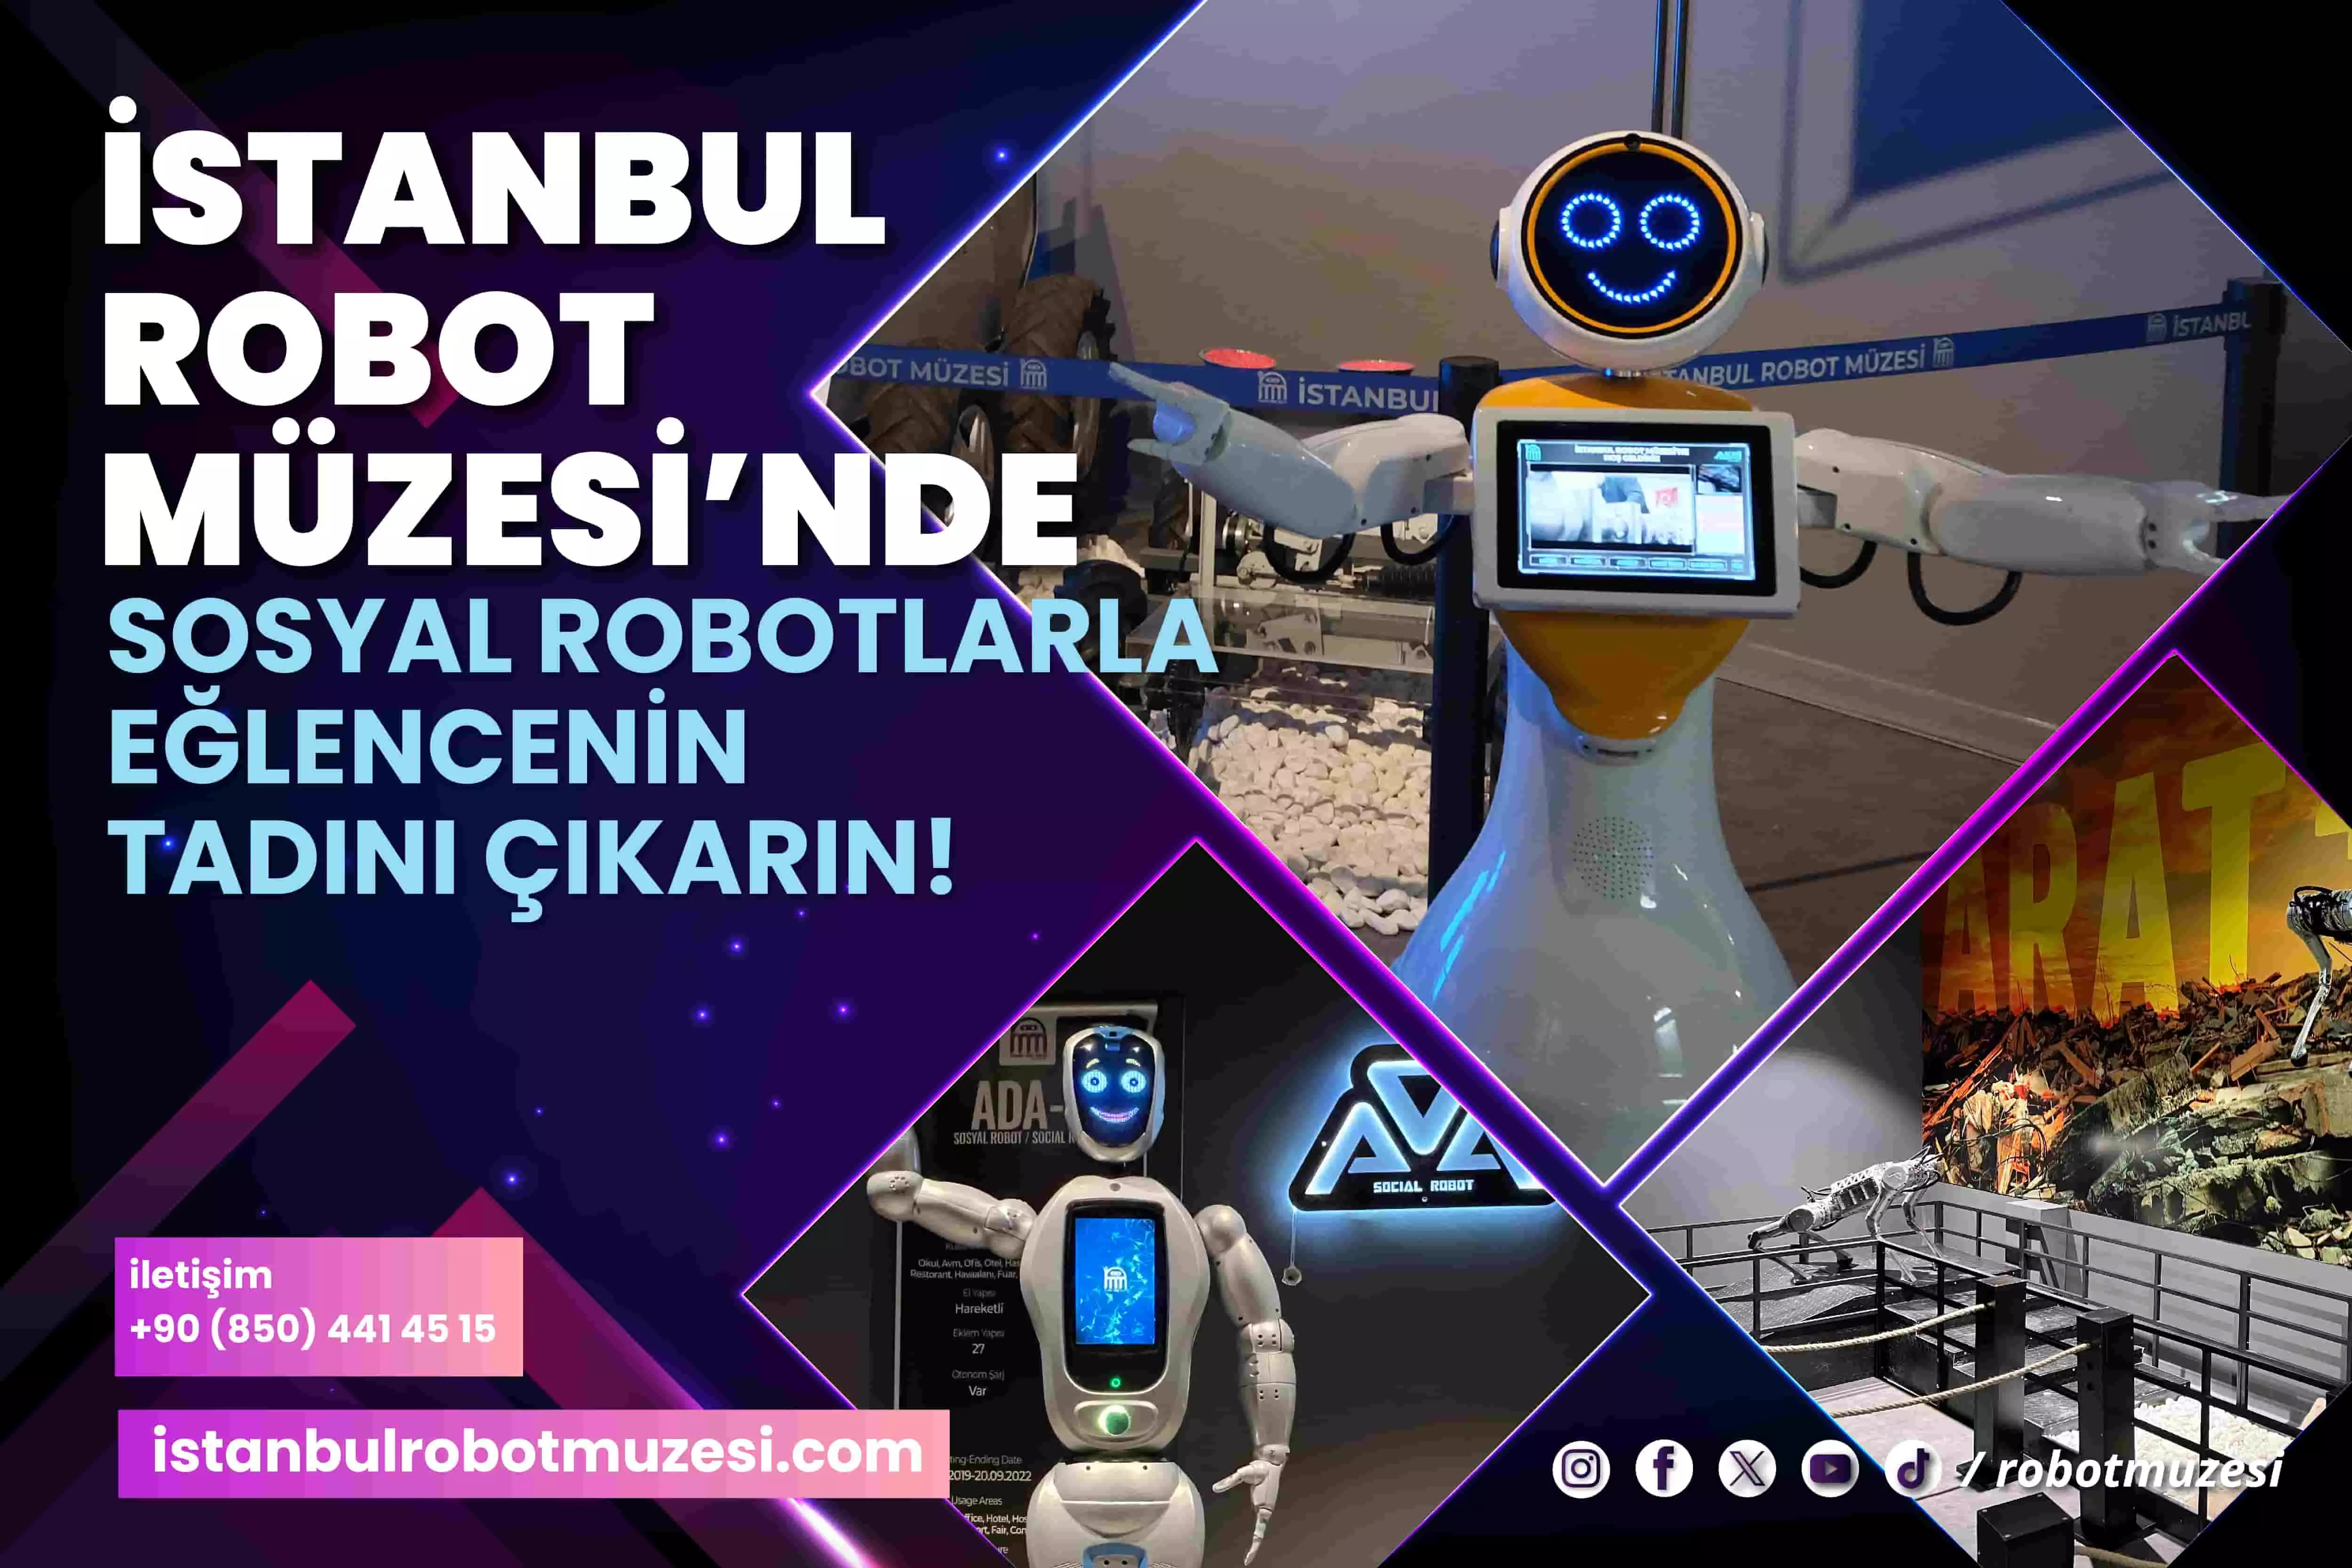 Museu do Robô de Istambul Bilhete - 7